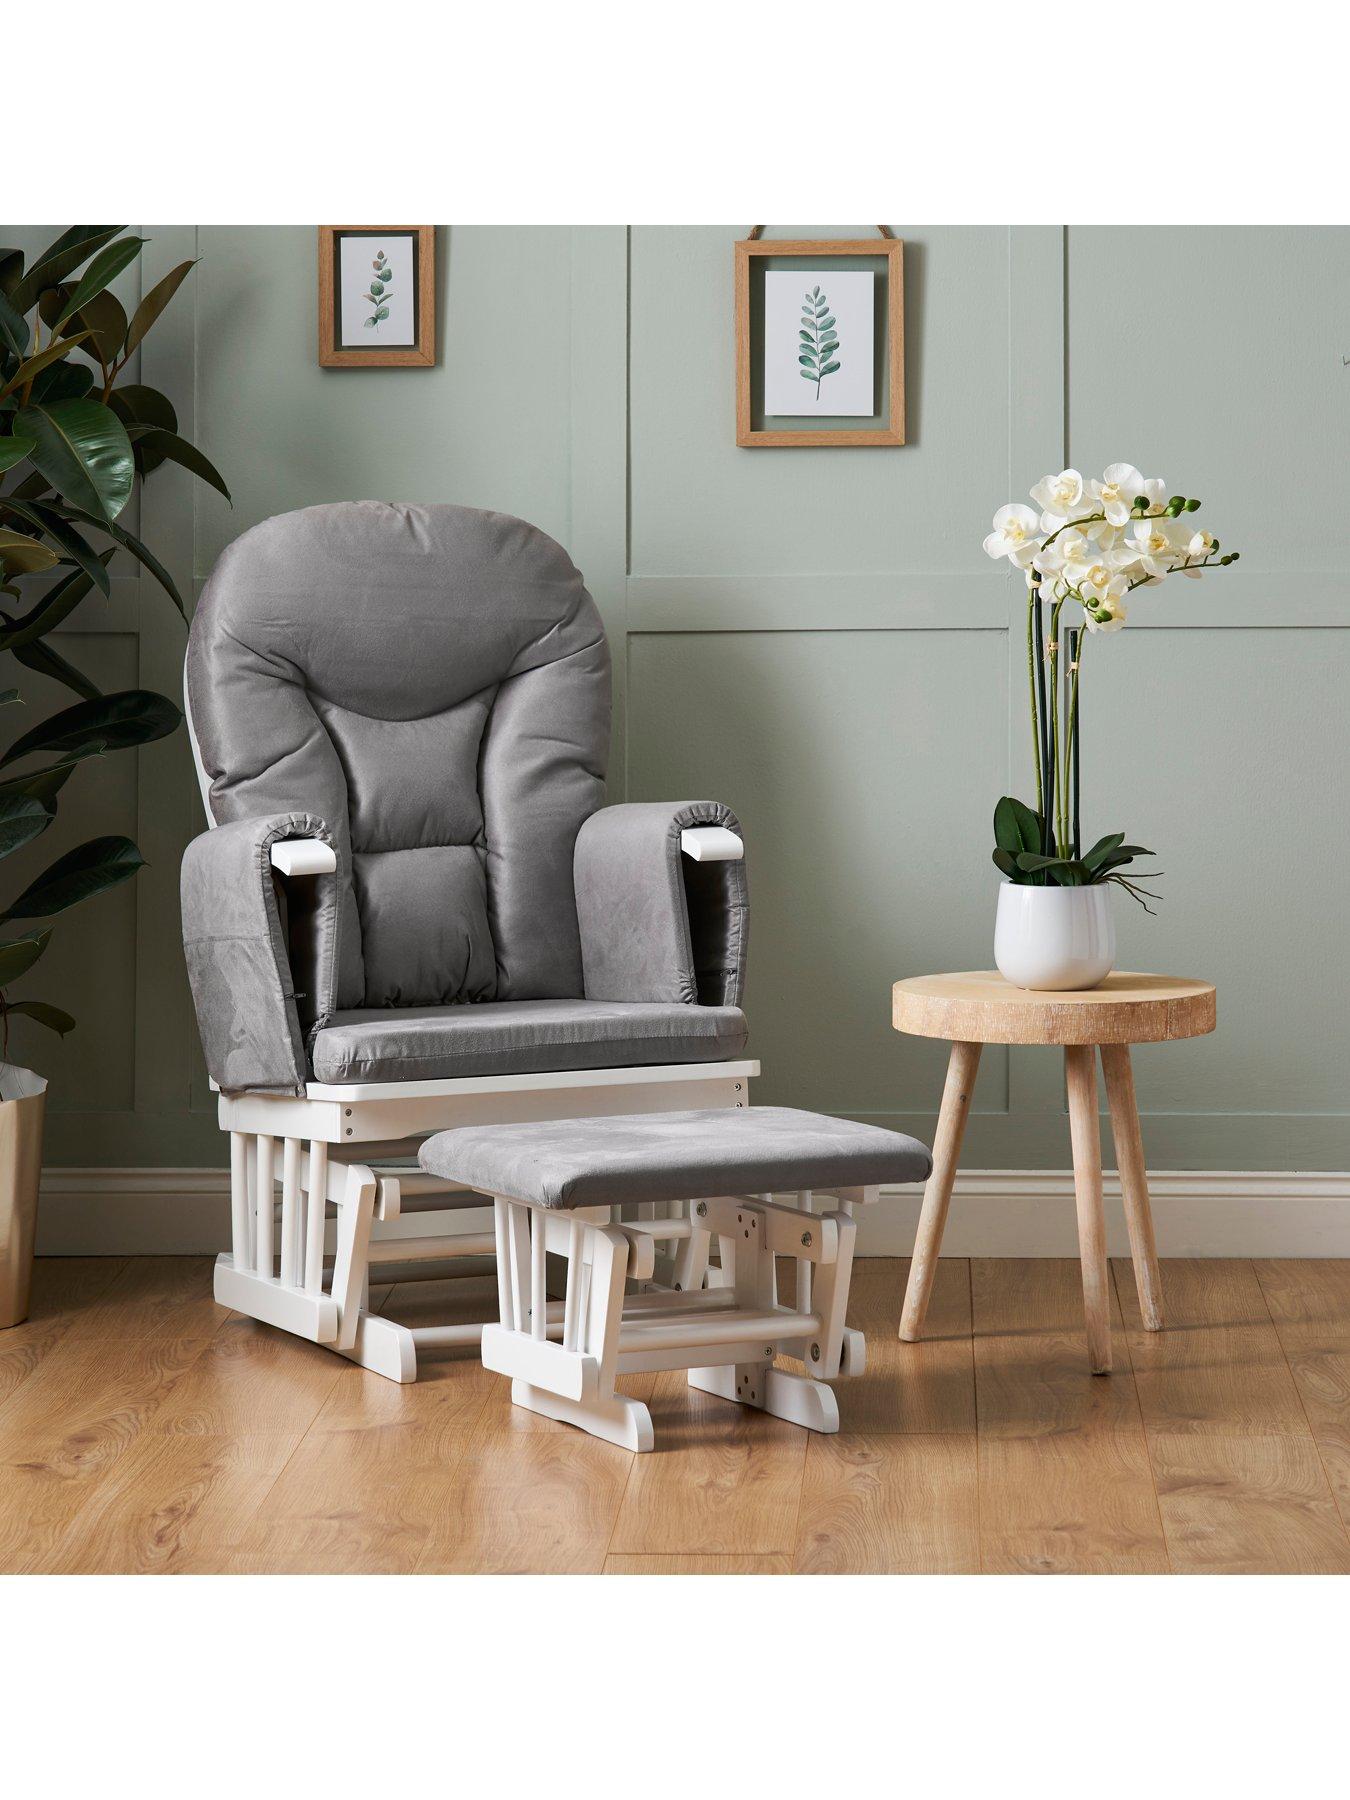 nursery rocking chair ireland